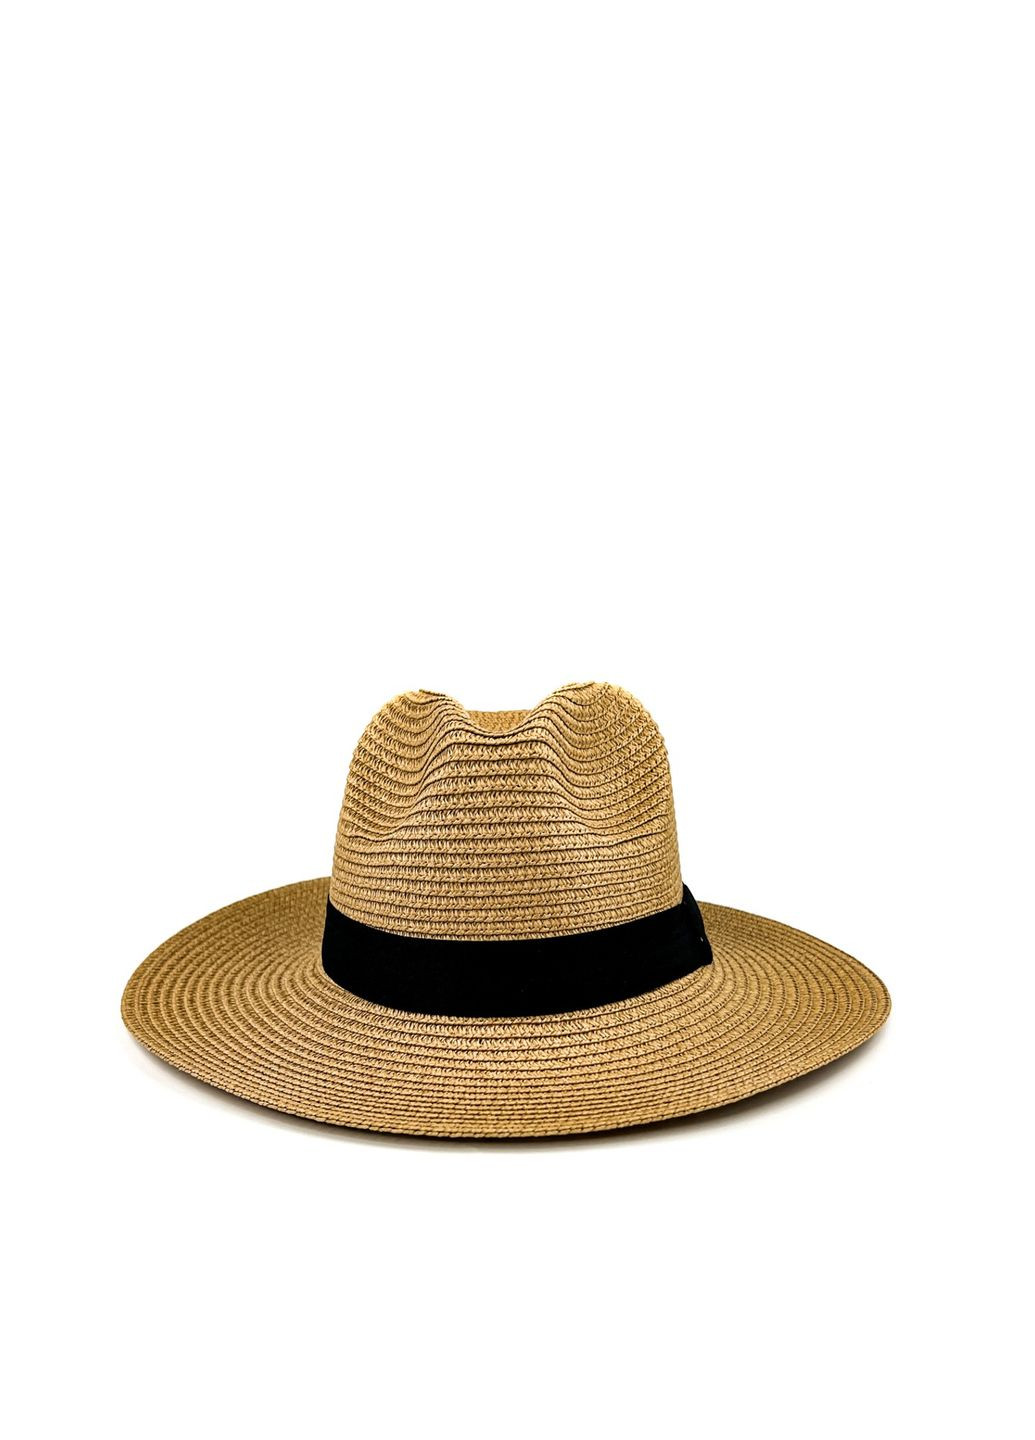 Шляпа федора мужская бумага бежевая ТИМИШ 470-958 LuckyLOOK 470-958м (294977550)